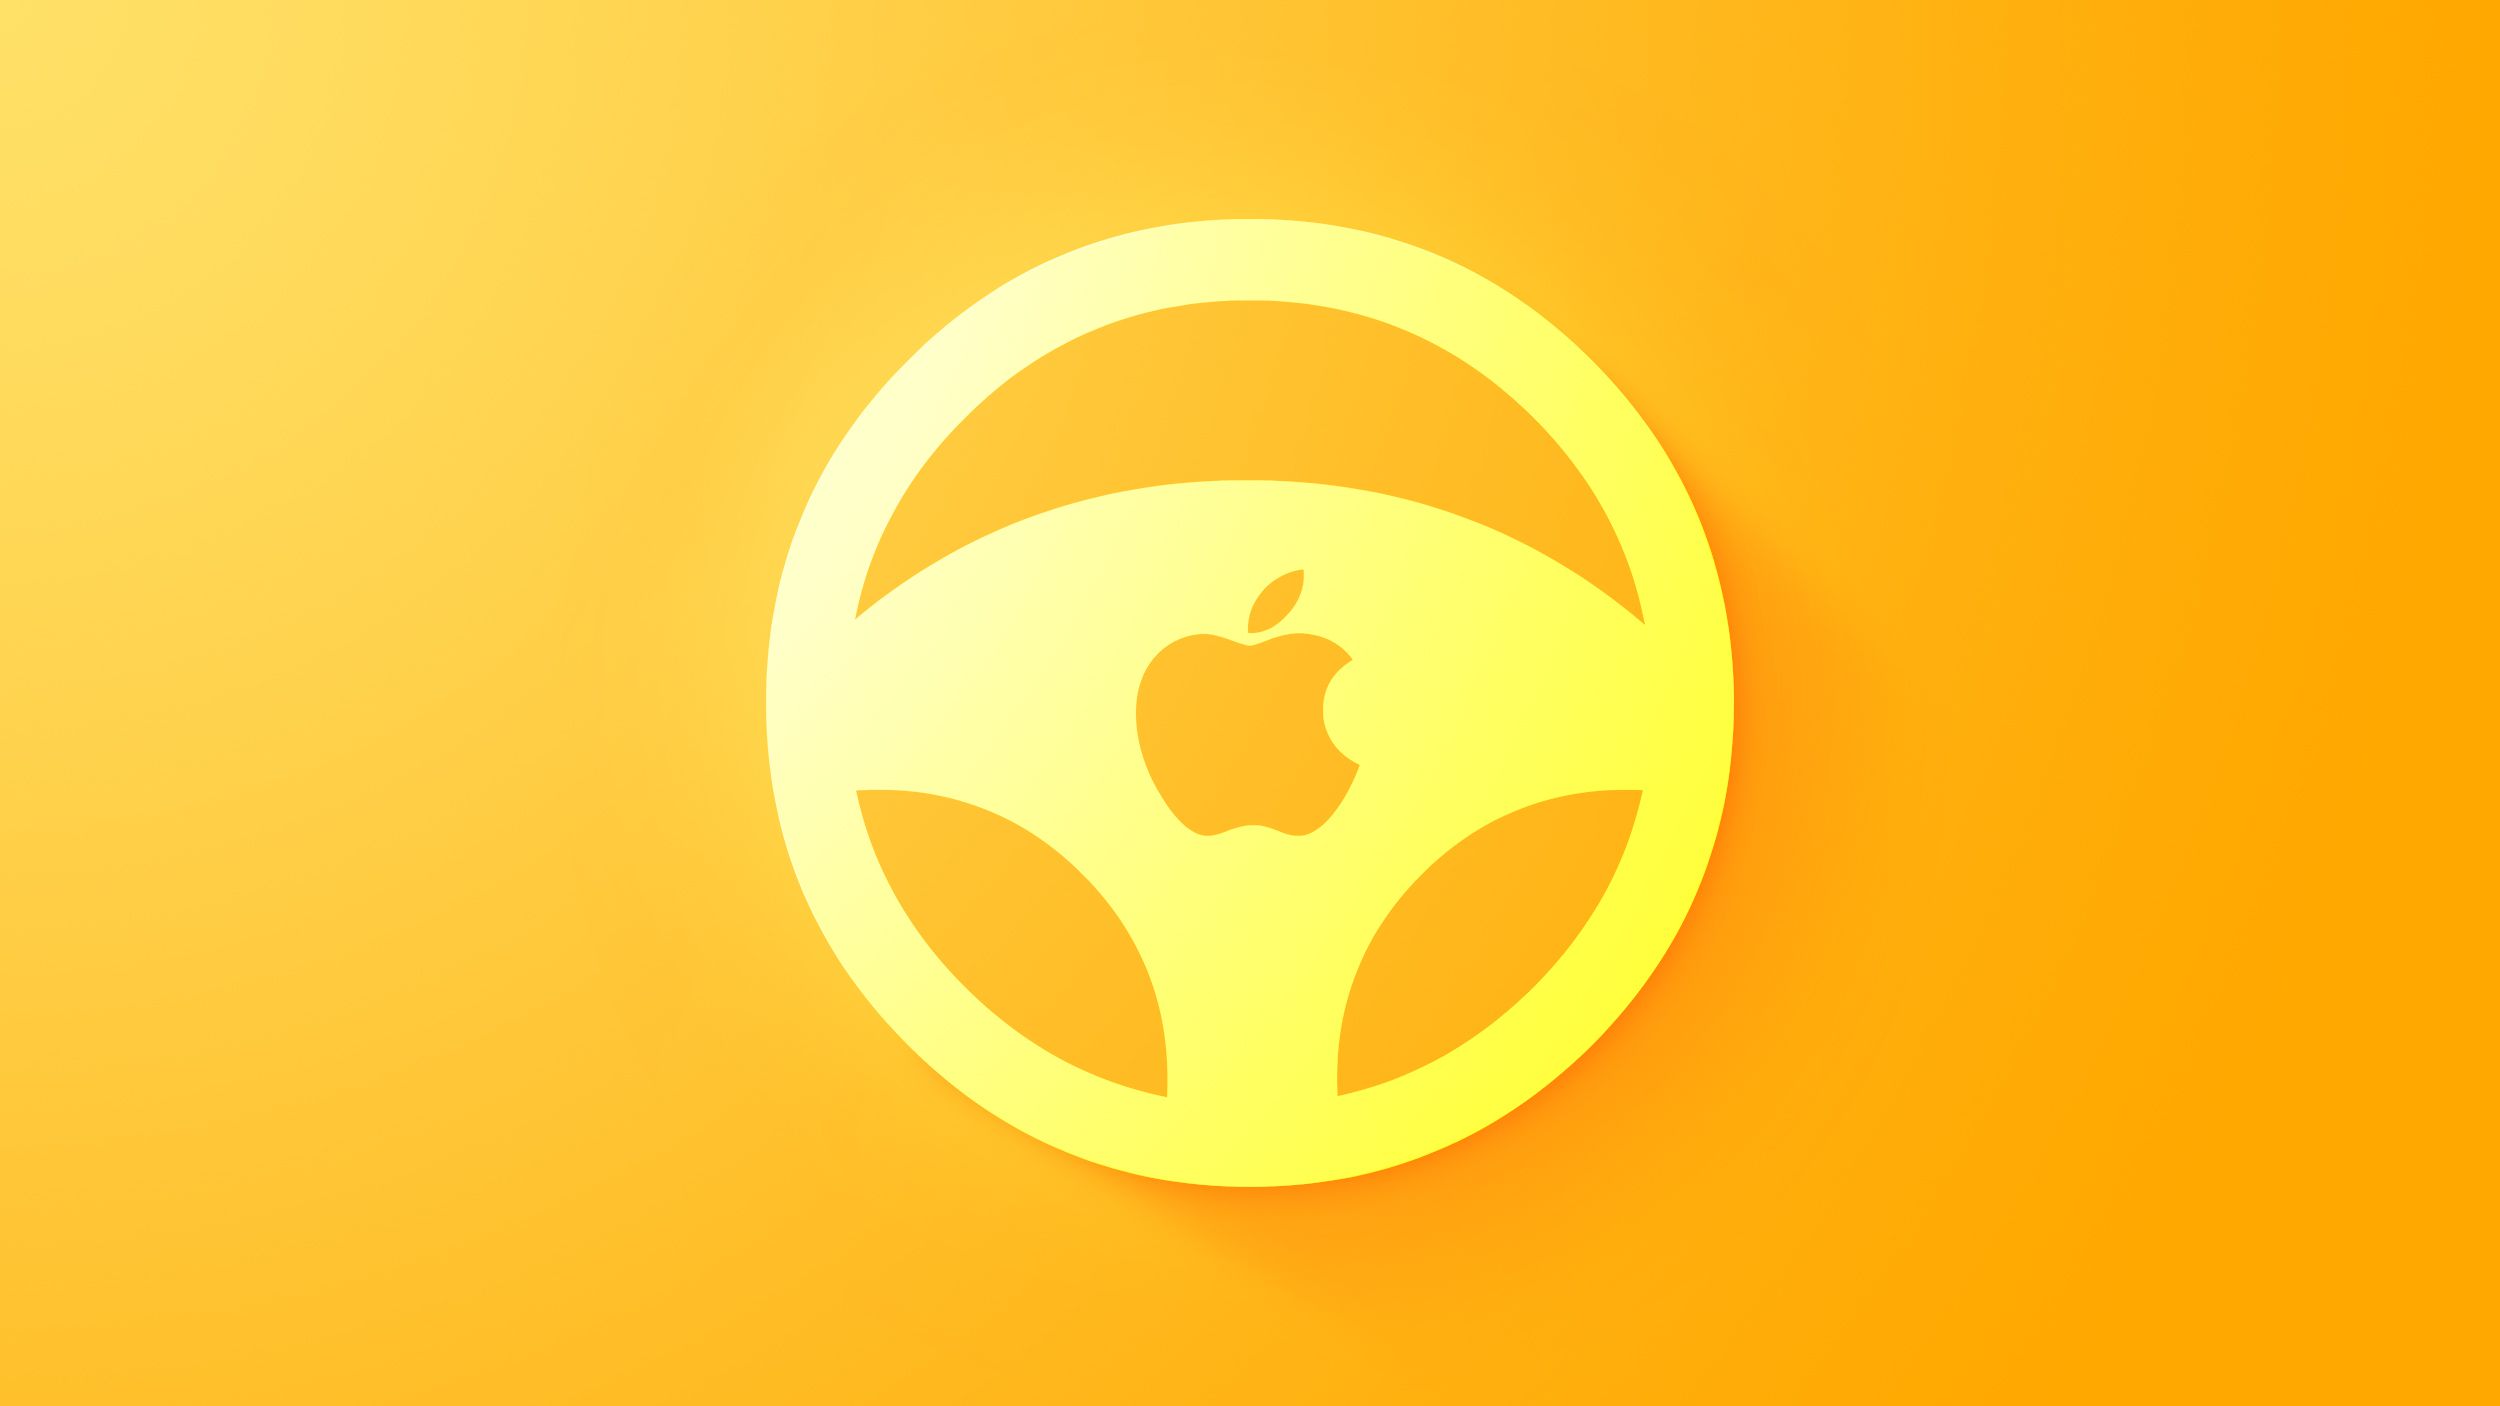 Apple-car-wheel-icon-feature-yellow